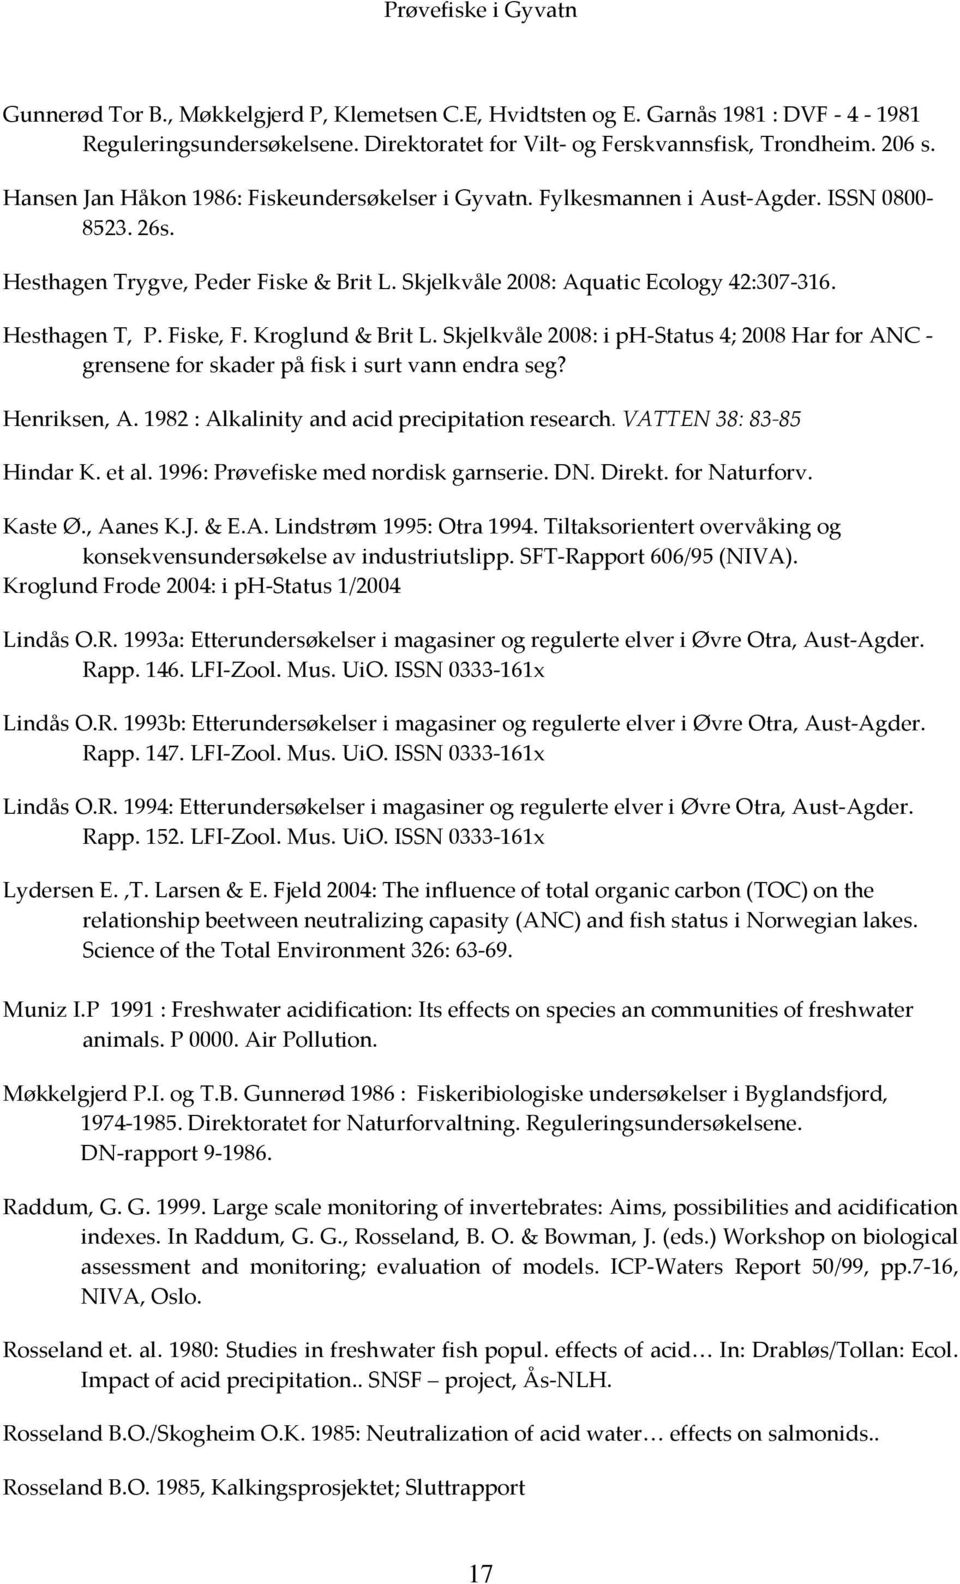 Fiske, F. Kroglund & Brit L. Skjelkvåle 2008: i ph-status 4; 2008 Har for ANC - grensene for skader på fisk i surt vann endra seg? Henriksen, A. 1982 : Alkalinity and acid precipitation research.